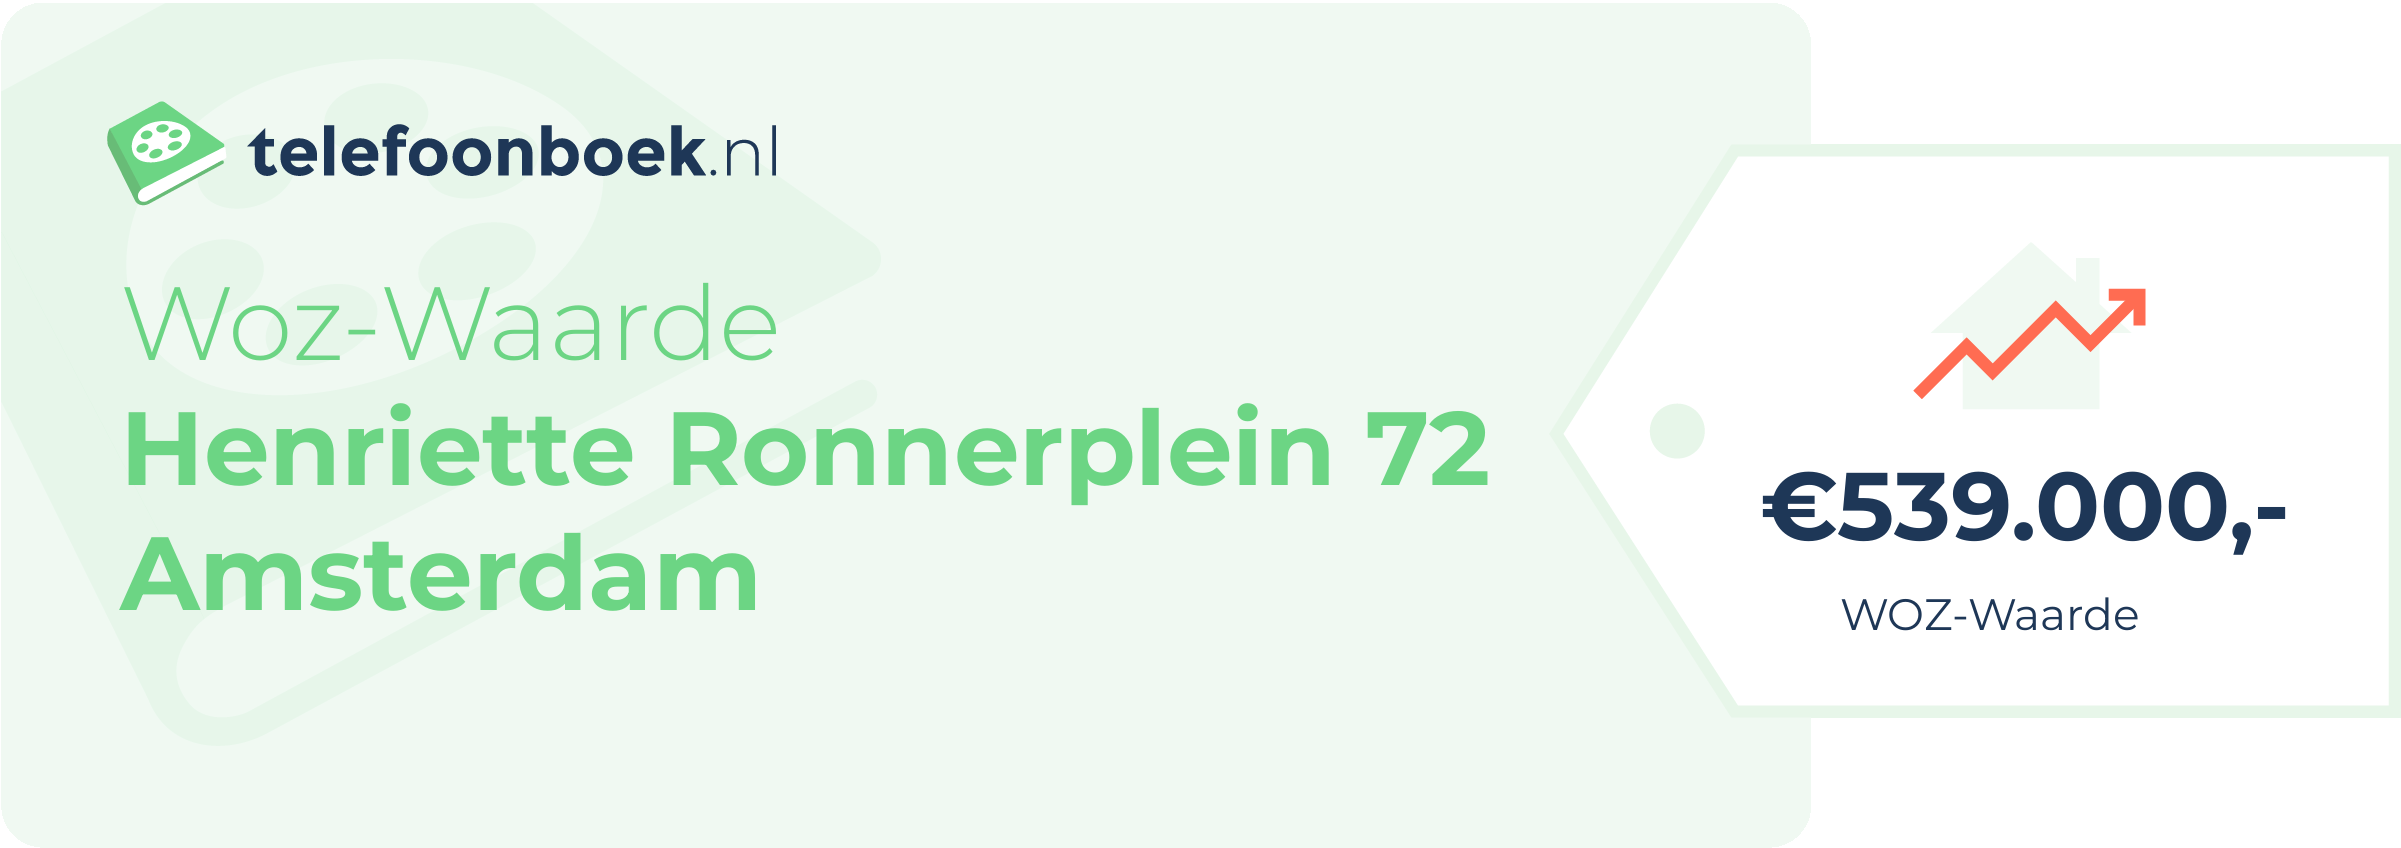 WOZ-waarde Henriette Ronnerplein 72 Amsterdam